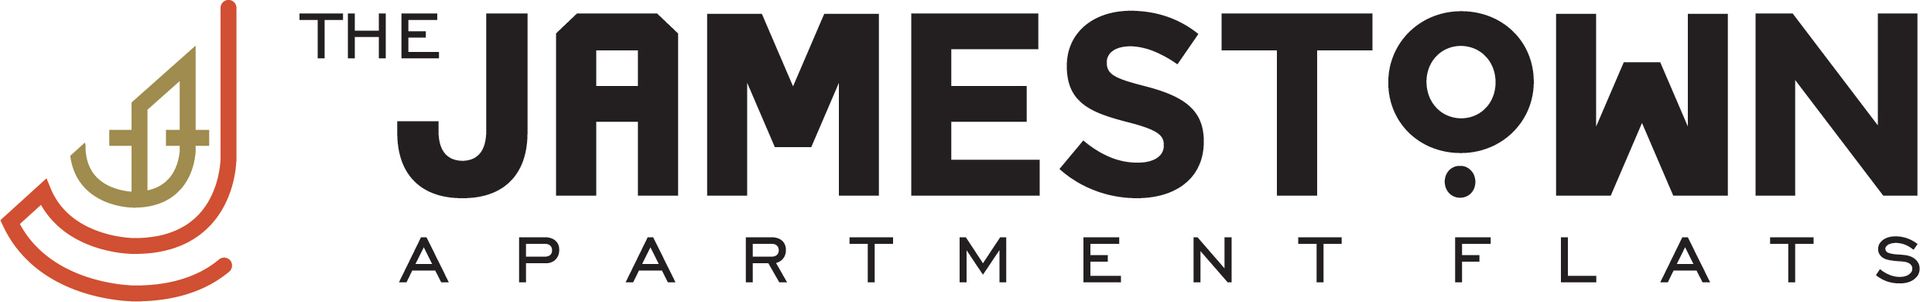 The Jamestown Apartment Flats logo.